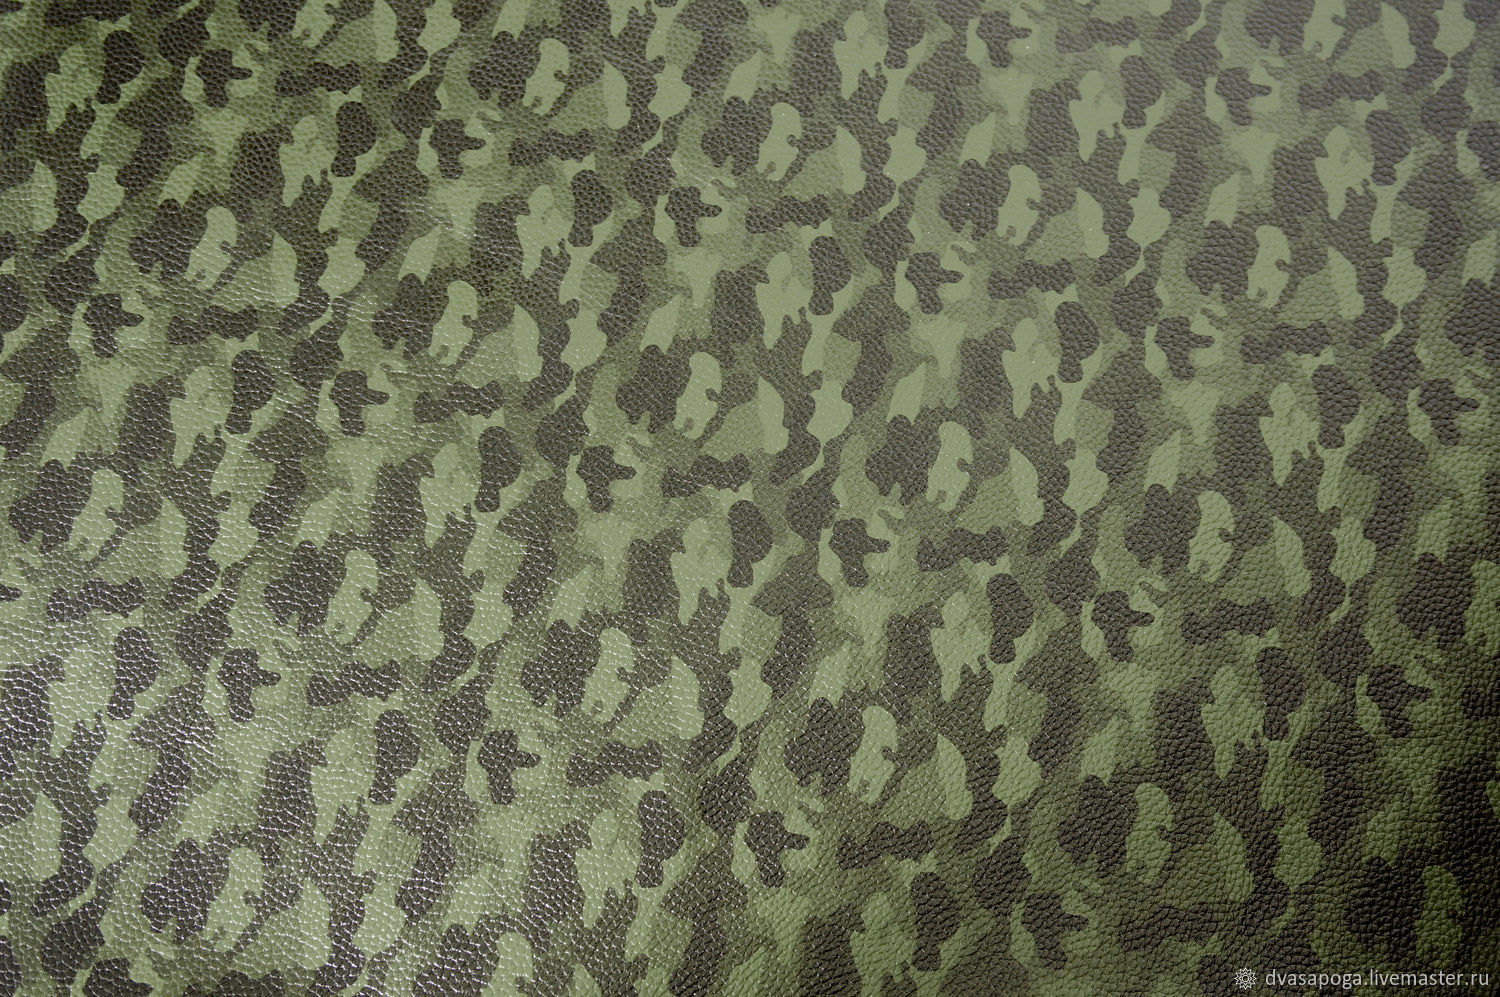 Хаки описание. Цвет хаки 806b2a. Ткань хаки армейский (RAL-7008). Хаки армейский (RAL-7008). Камуфляжный цвет.